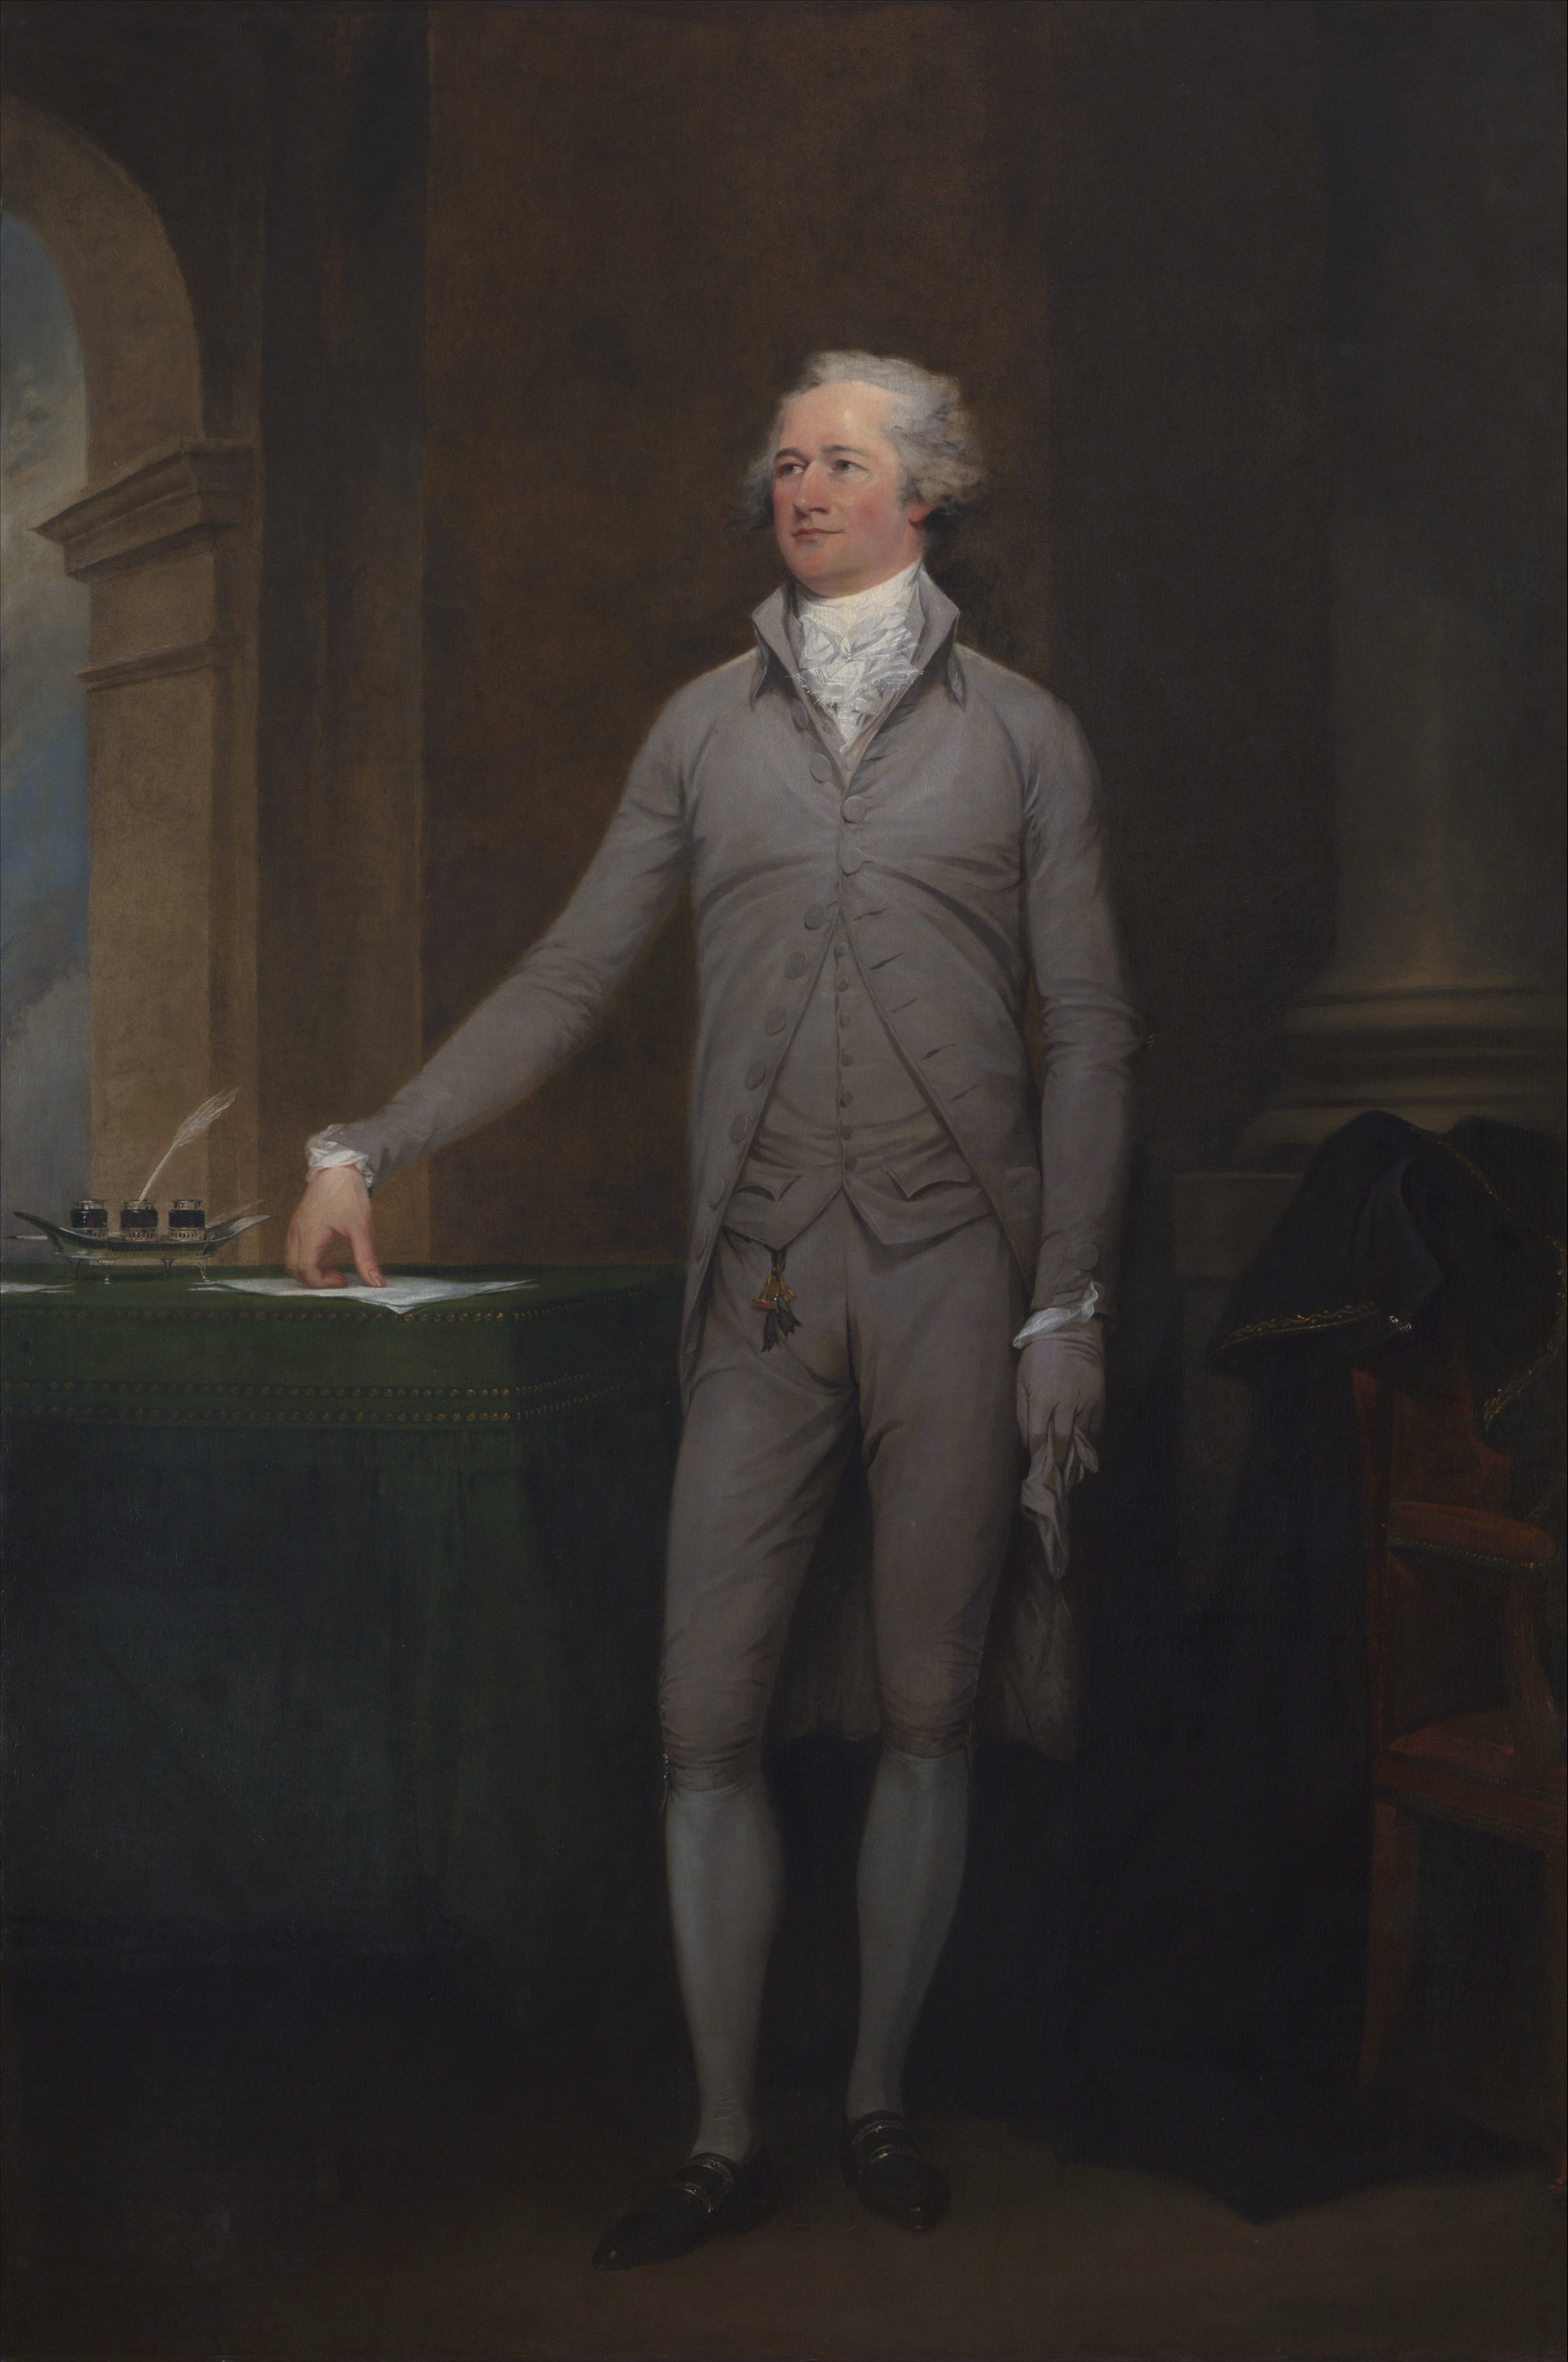 Alexander Hamilton portrait in The Metropolitan Museum of Art